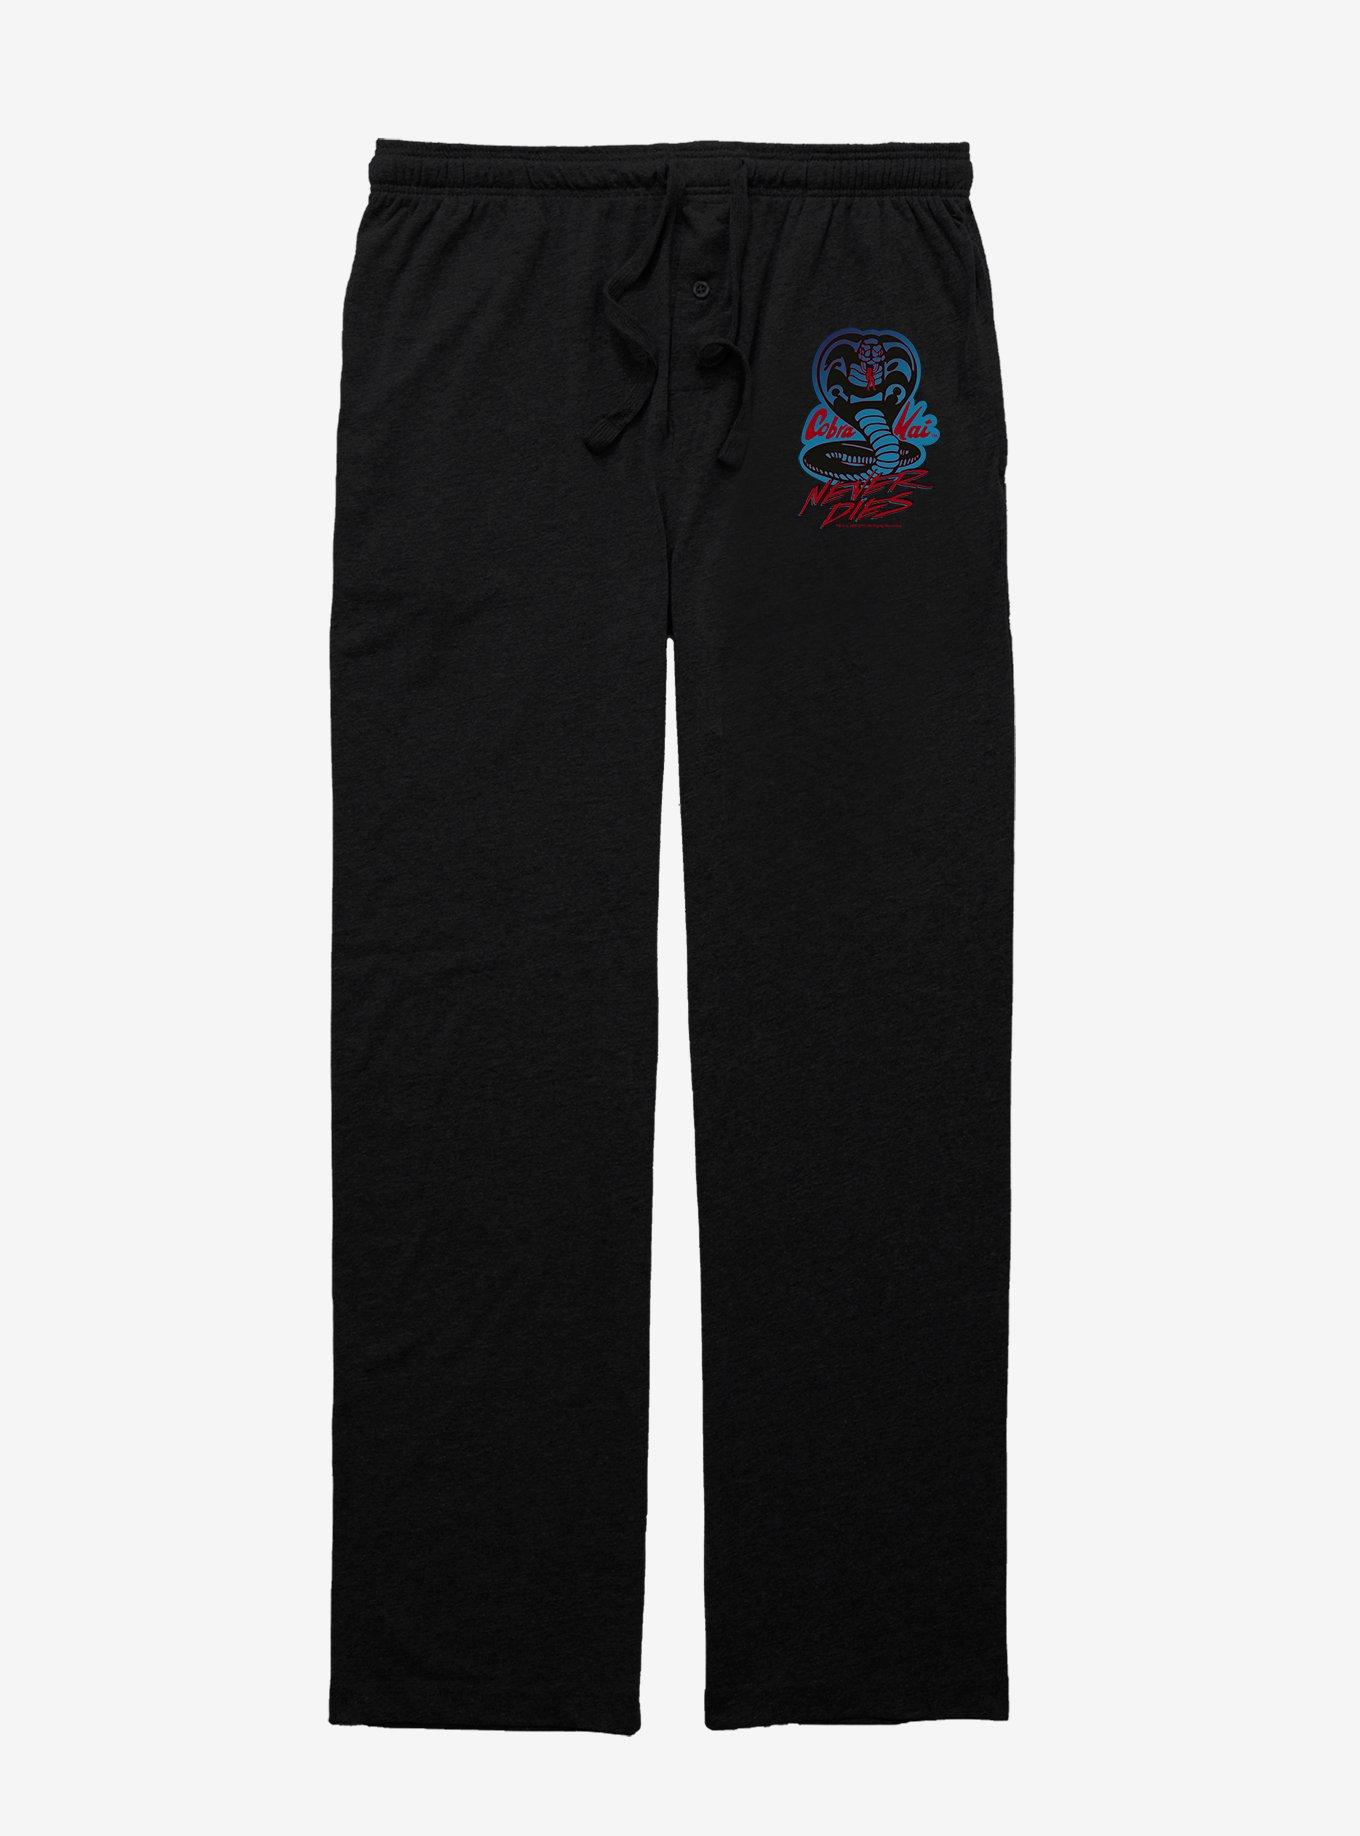 Cobra Kai Motto Pajama Pants, BLACK, hi-res